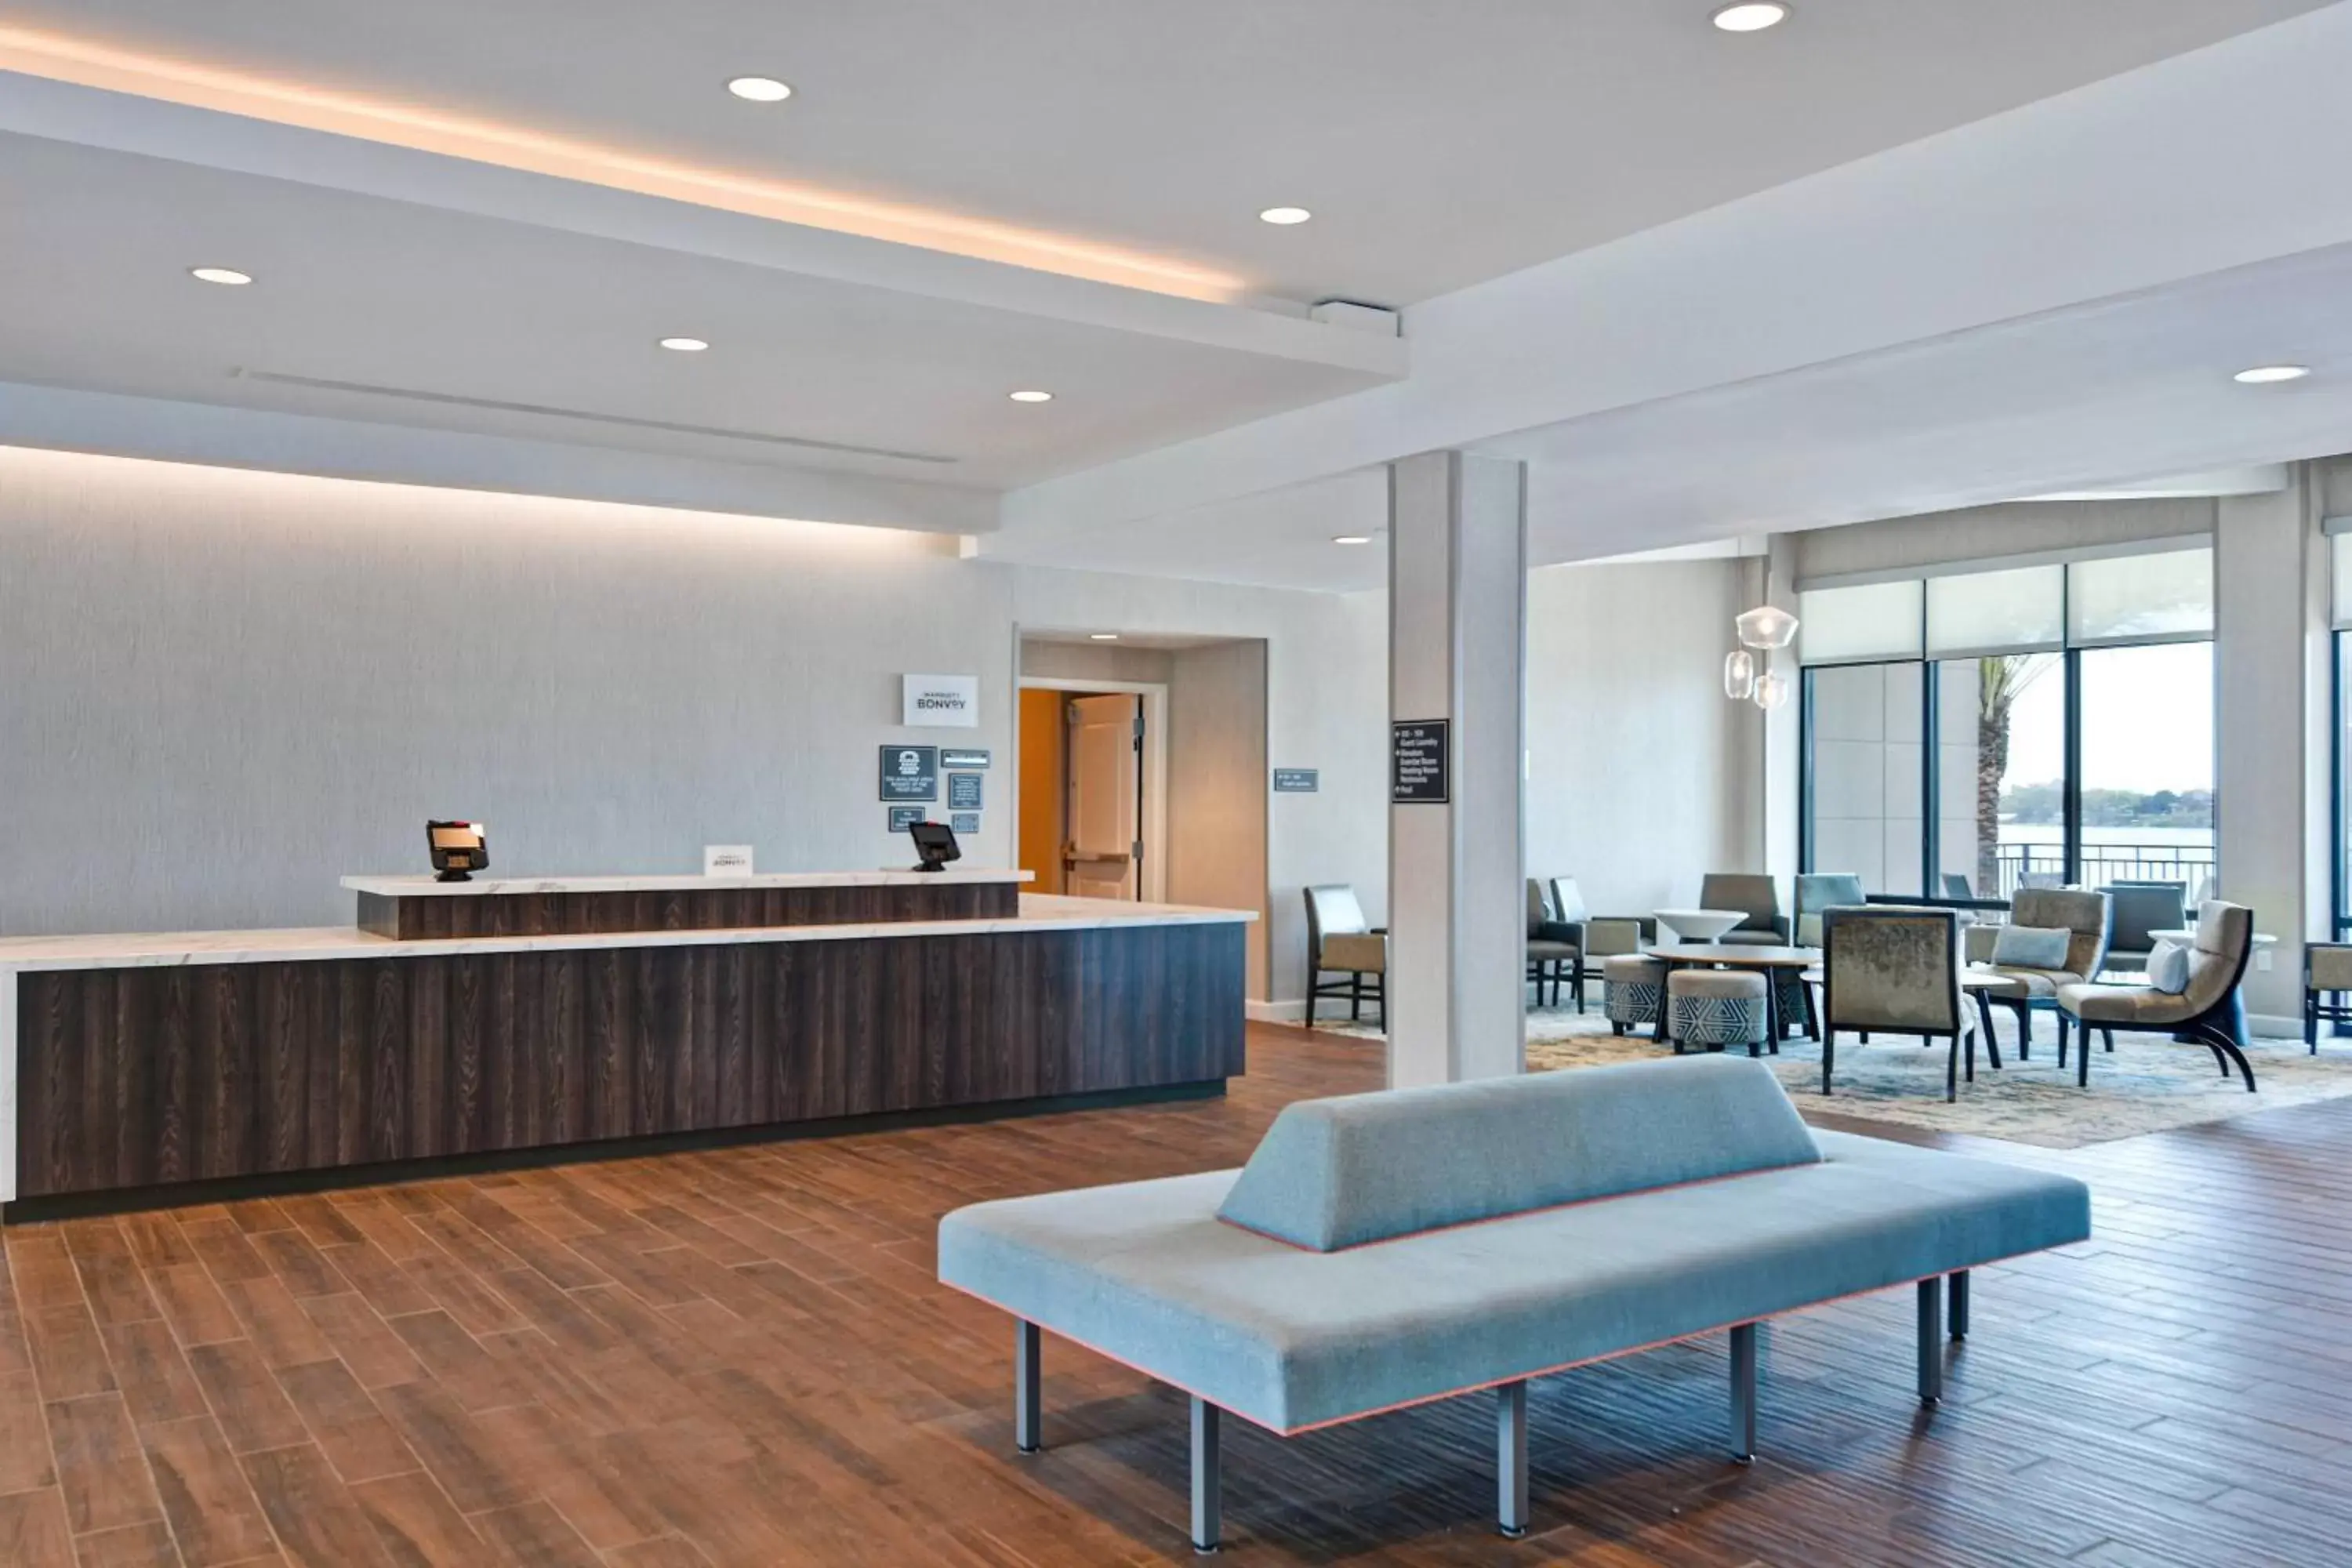 Lobby or reception in Residence Inn by Marriott Fort Walton Beach